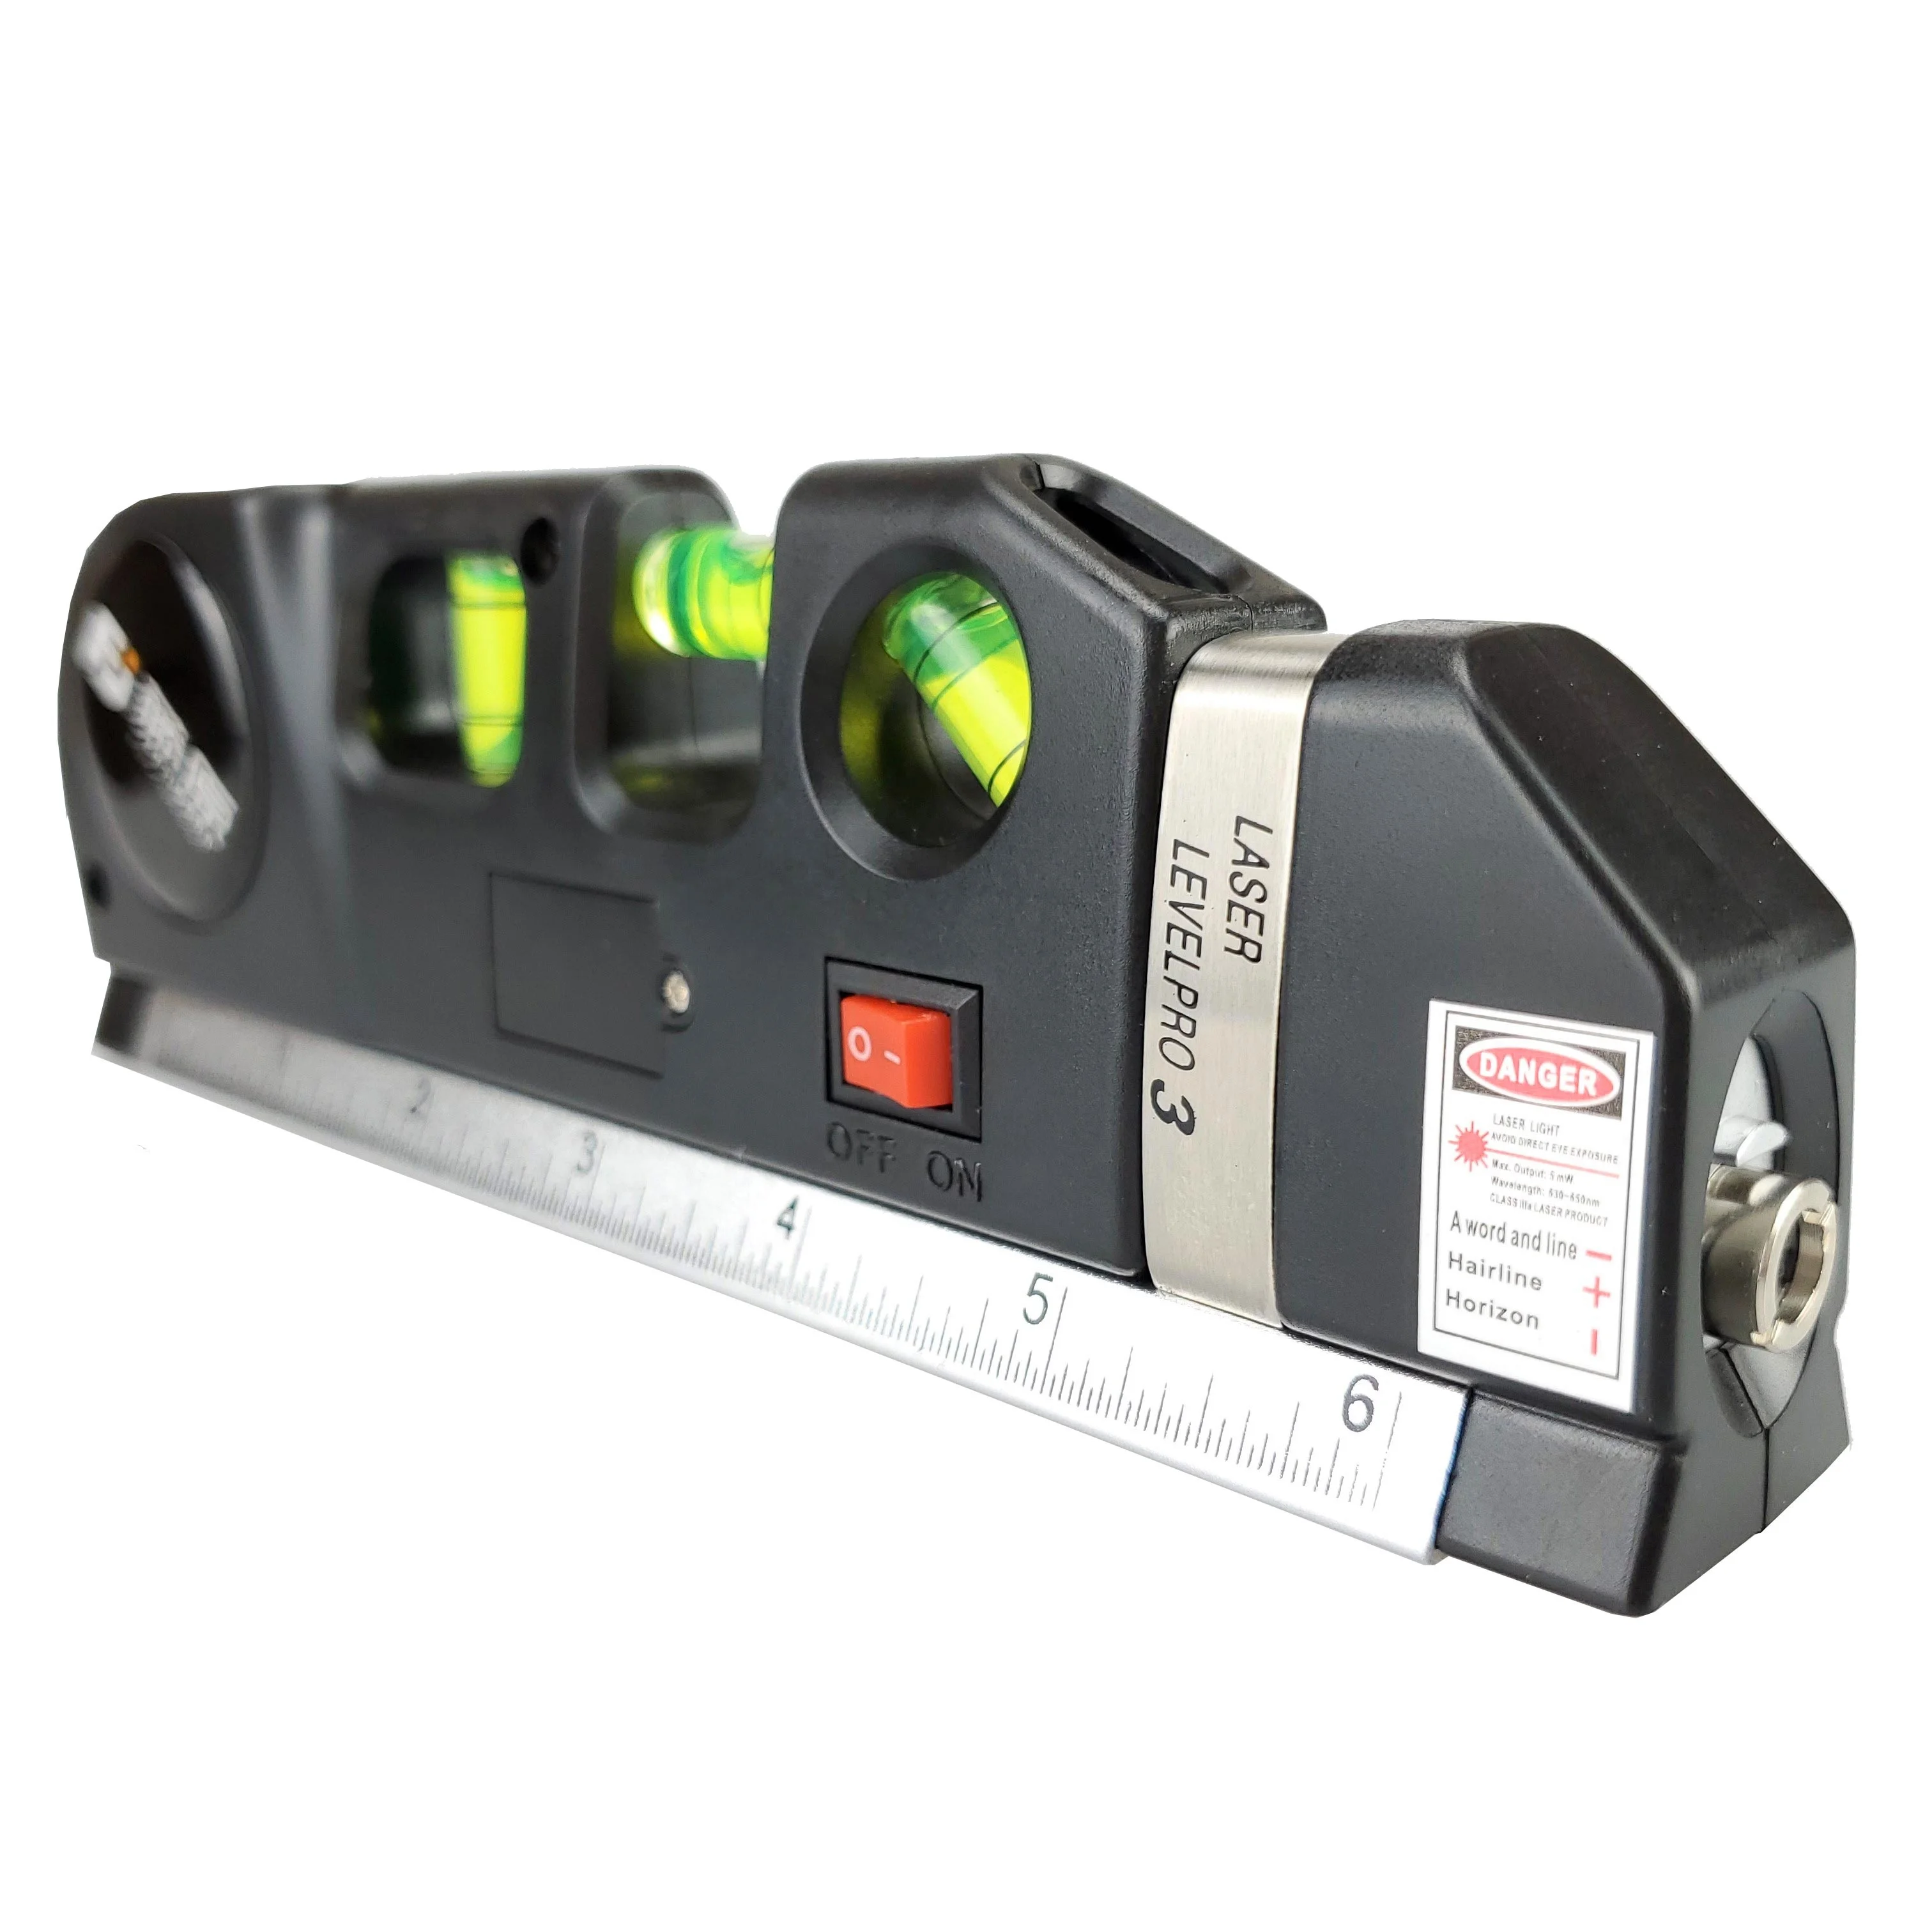 
Cheap price Multipurpose laser Level Measure Line 8ft  Cross Line Laser Level Adjusted and Metric Rulers Laser Level  (62413877402)